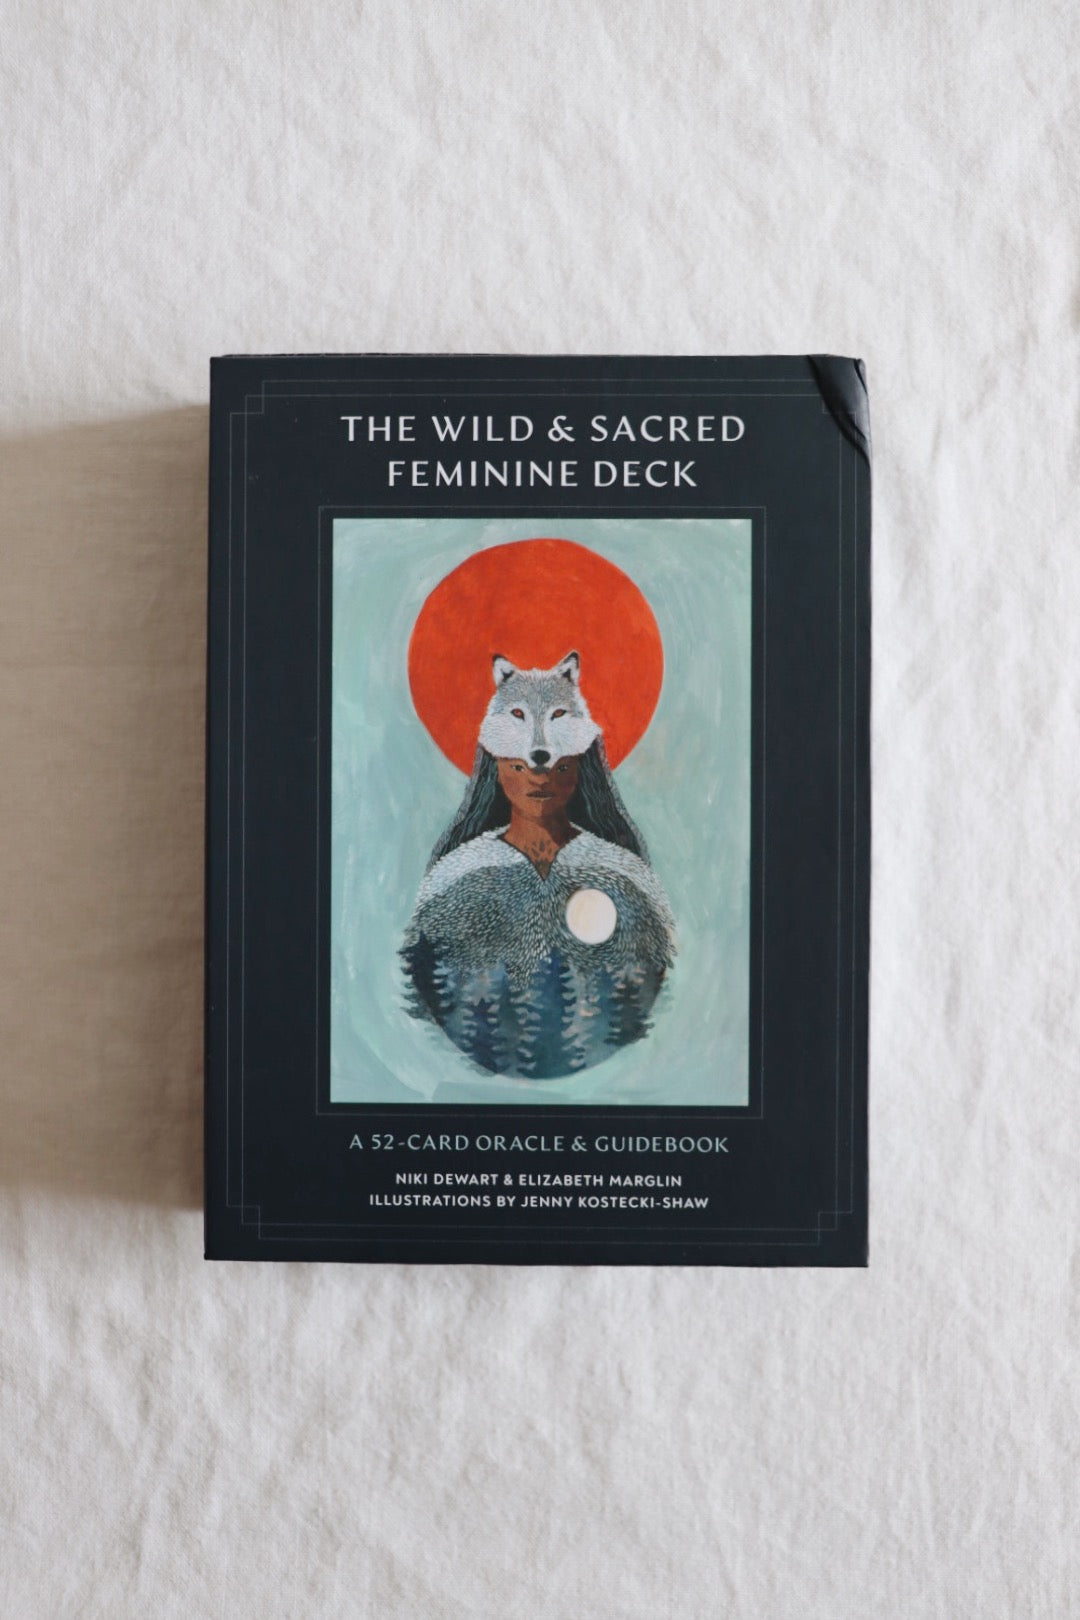 Wild and Sacred Feminine Deck